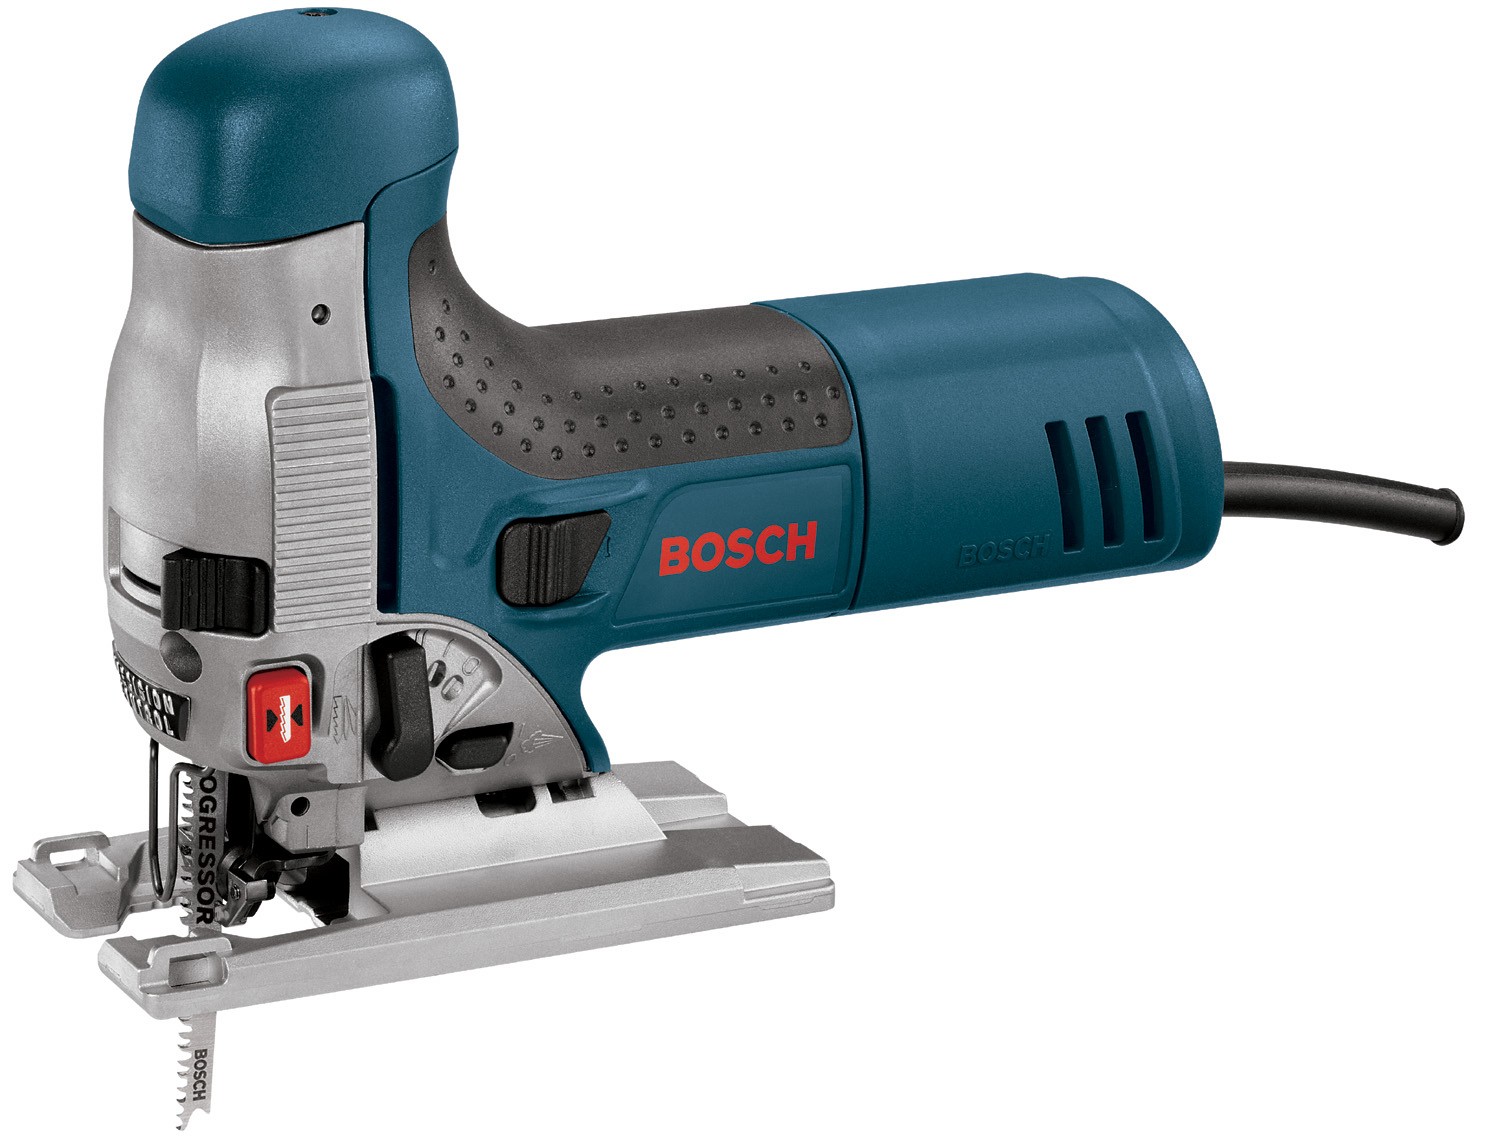 Повер инструмент. Bosch Power Tools. Power инструмент. Электроинструмент Bosch без фона. Bosch Power Tools commercial.